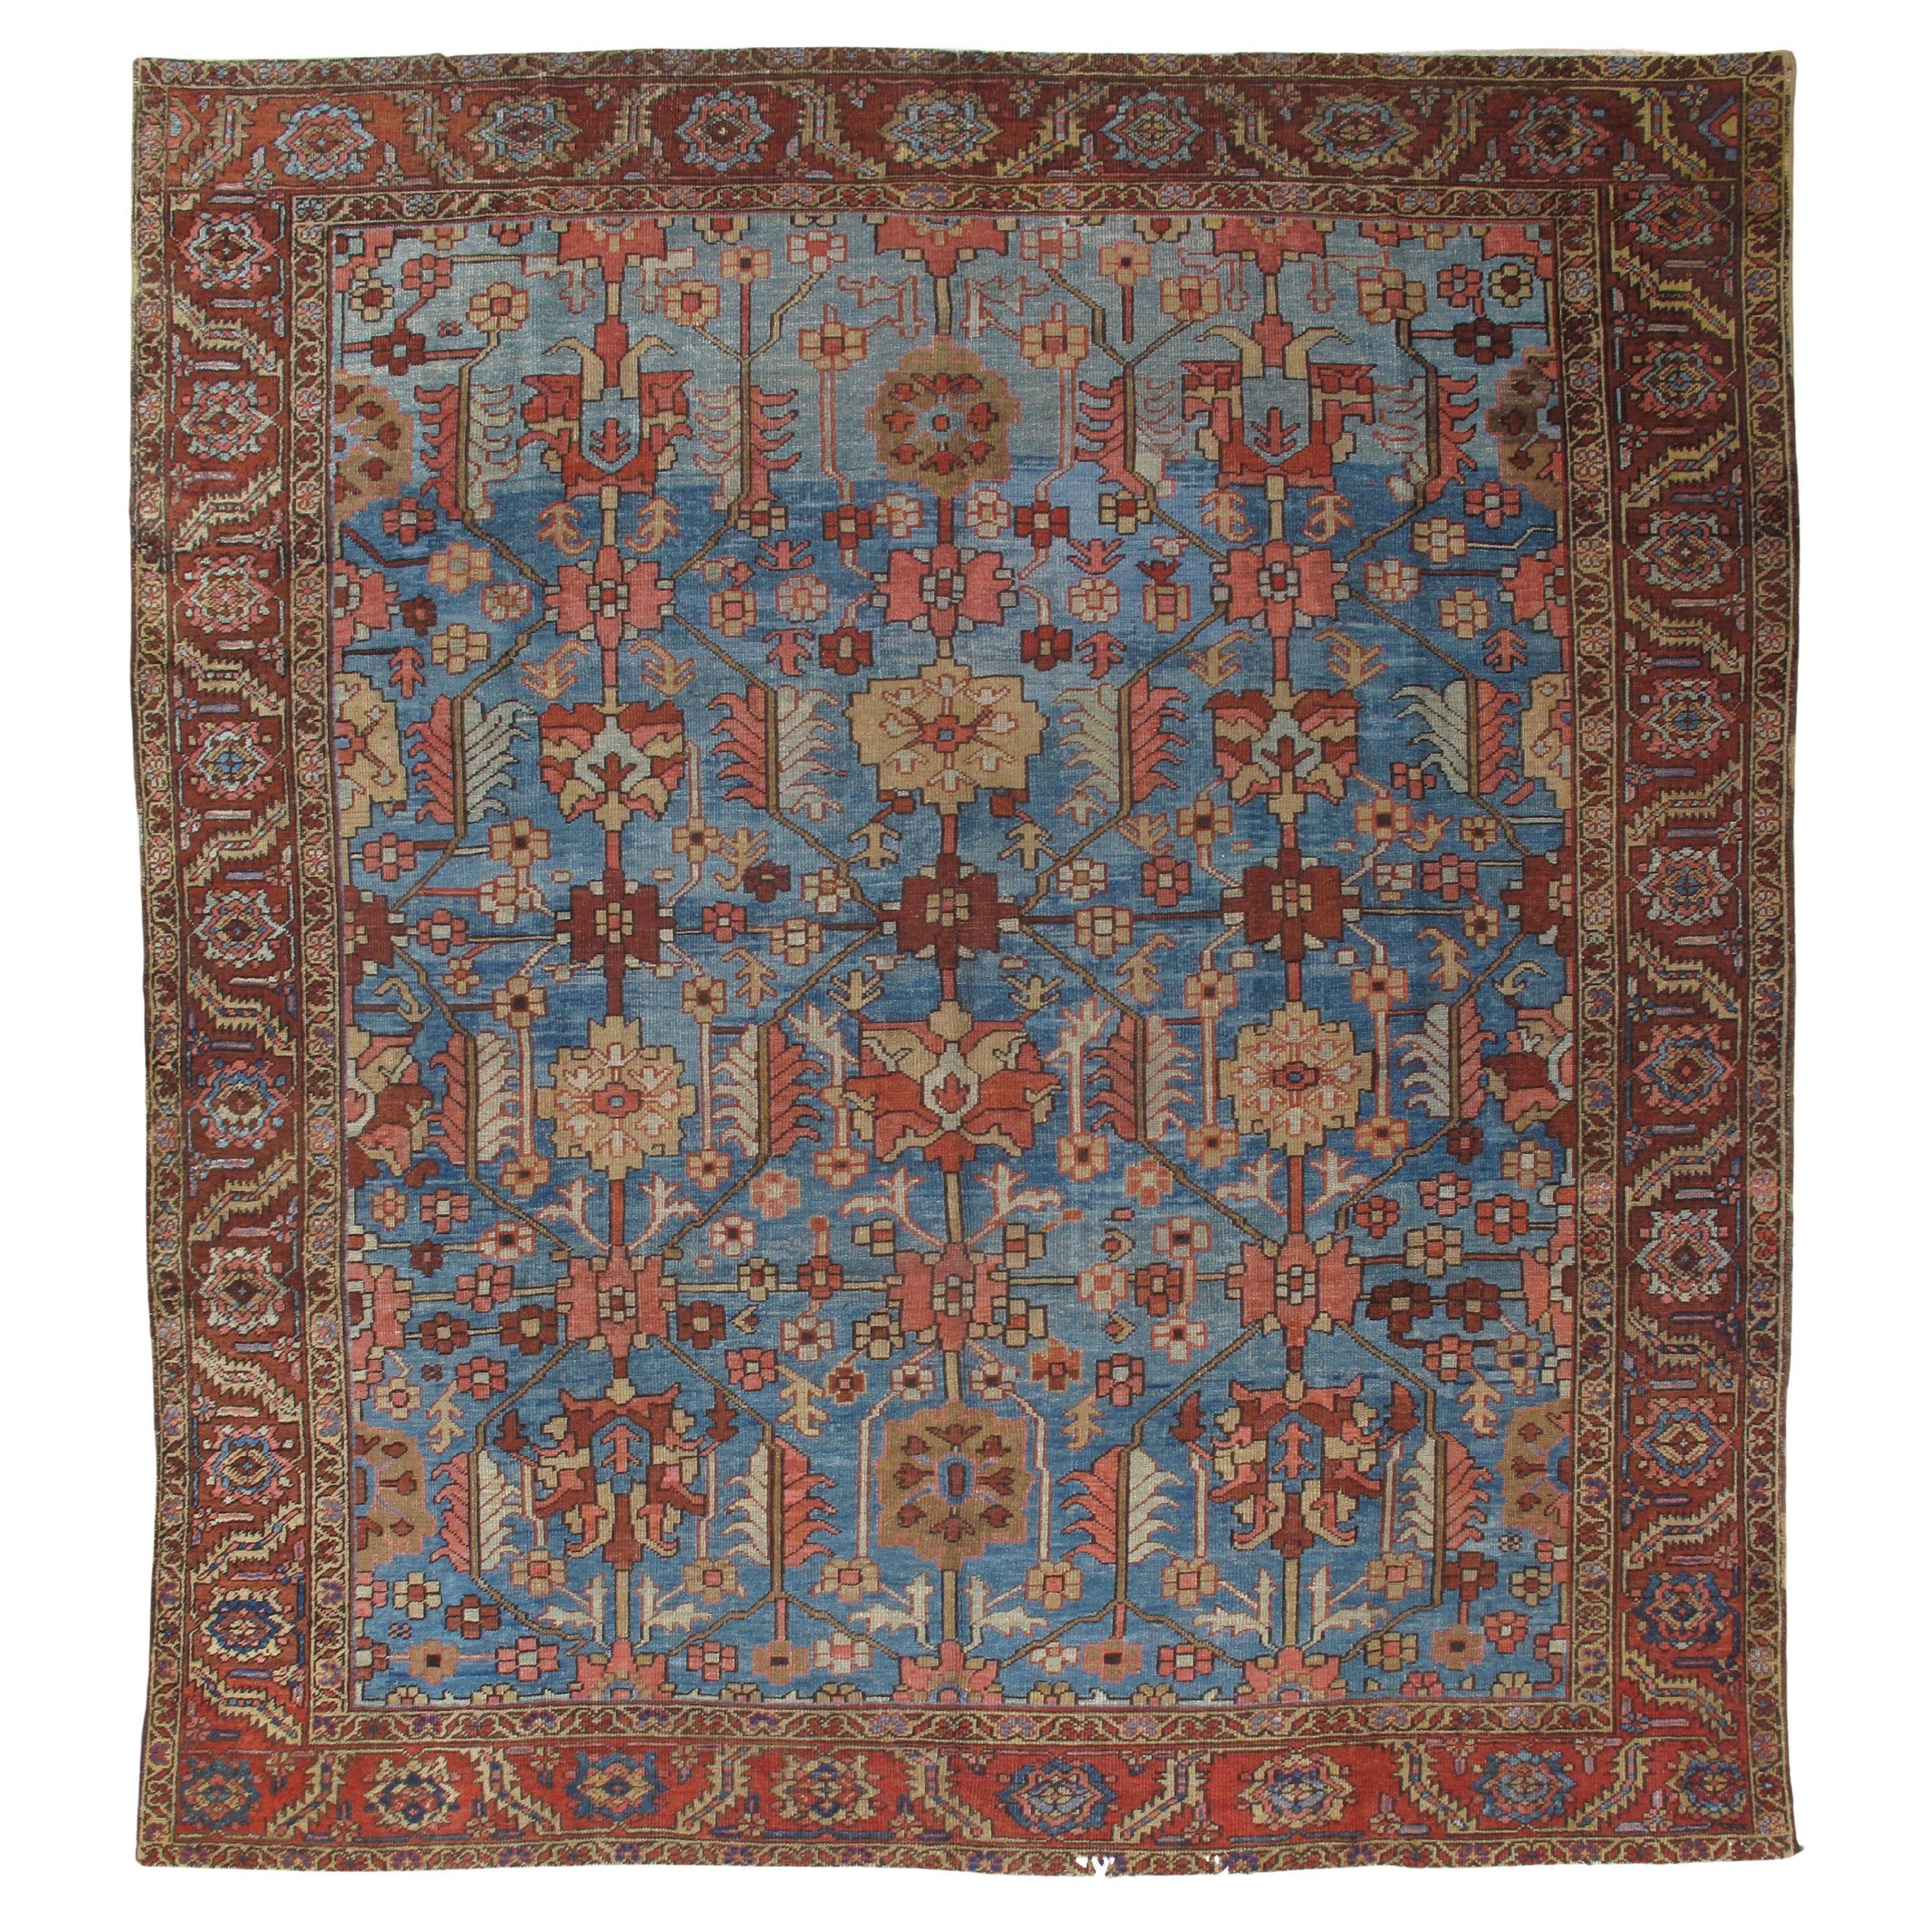 Antique Persian Serapi Carpet, Handmade Wool Oriental Rug, Rust and Light Blue